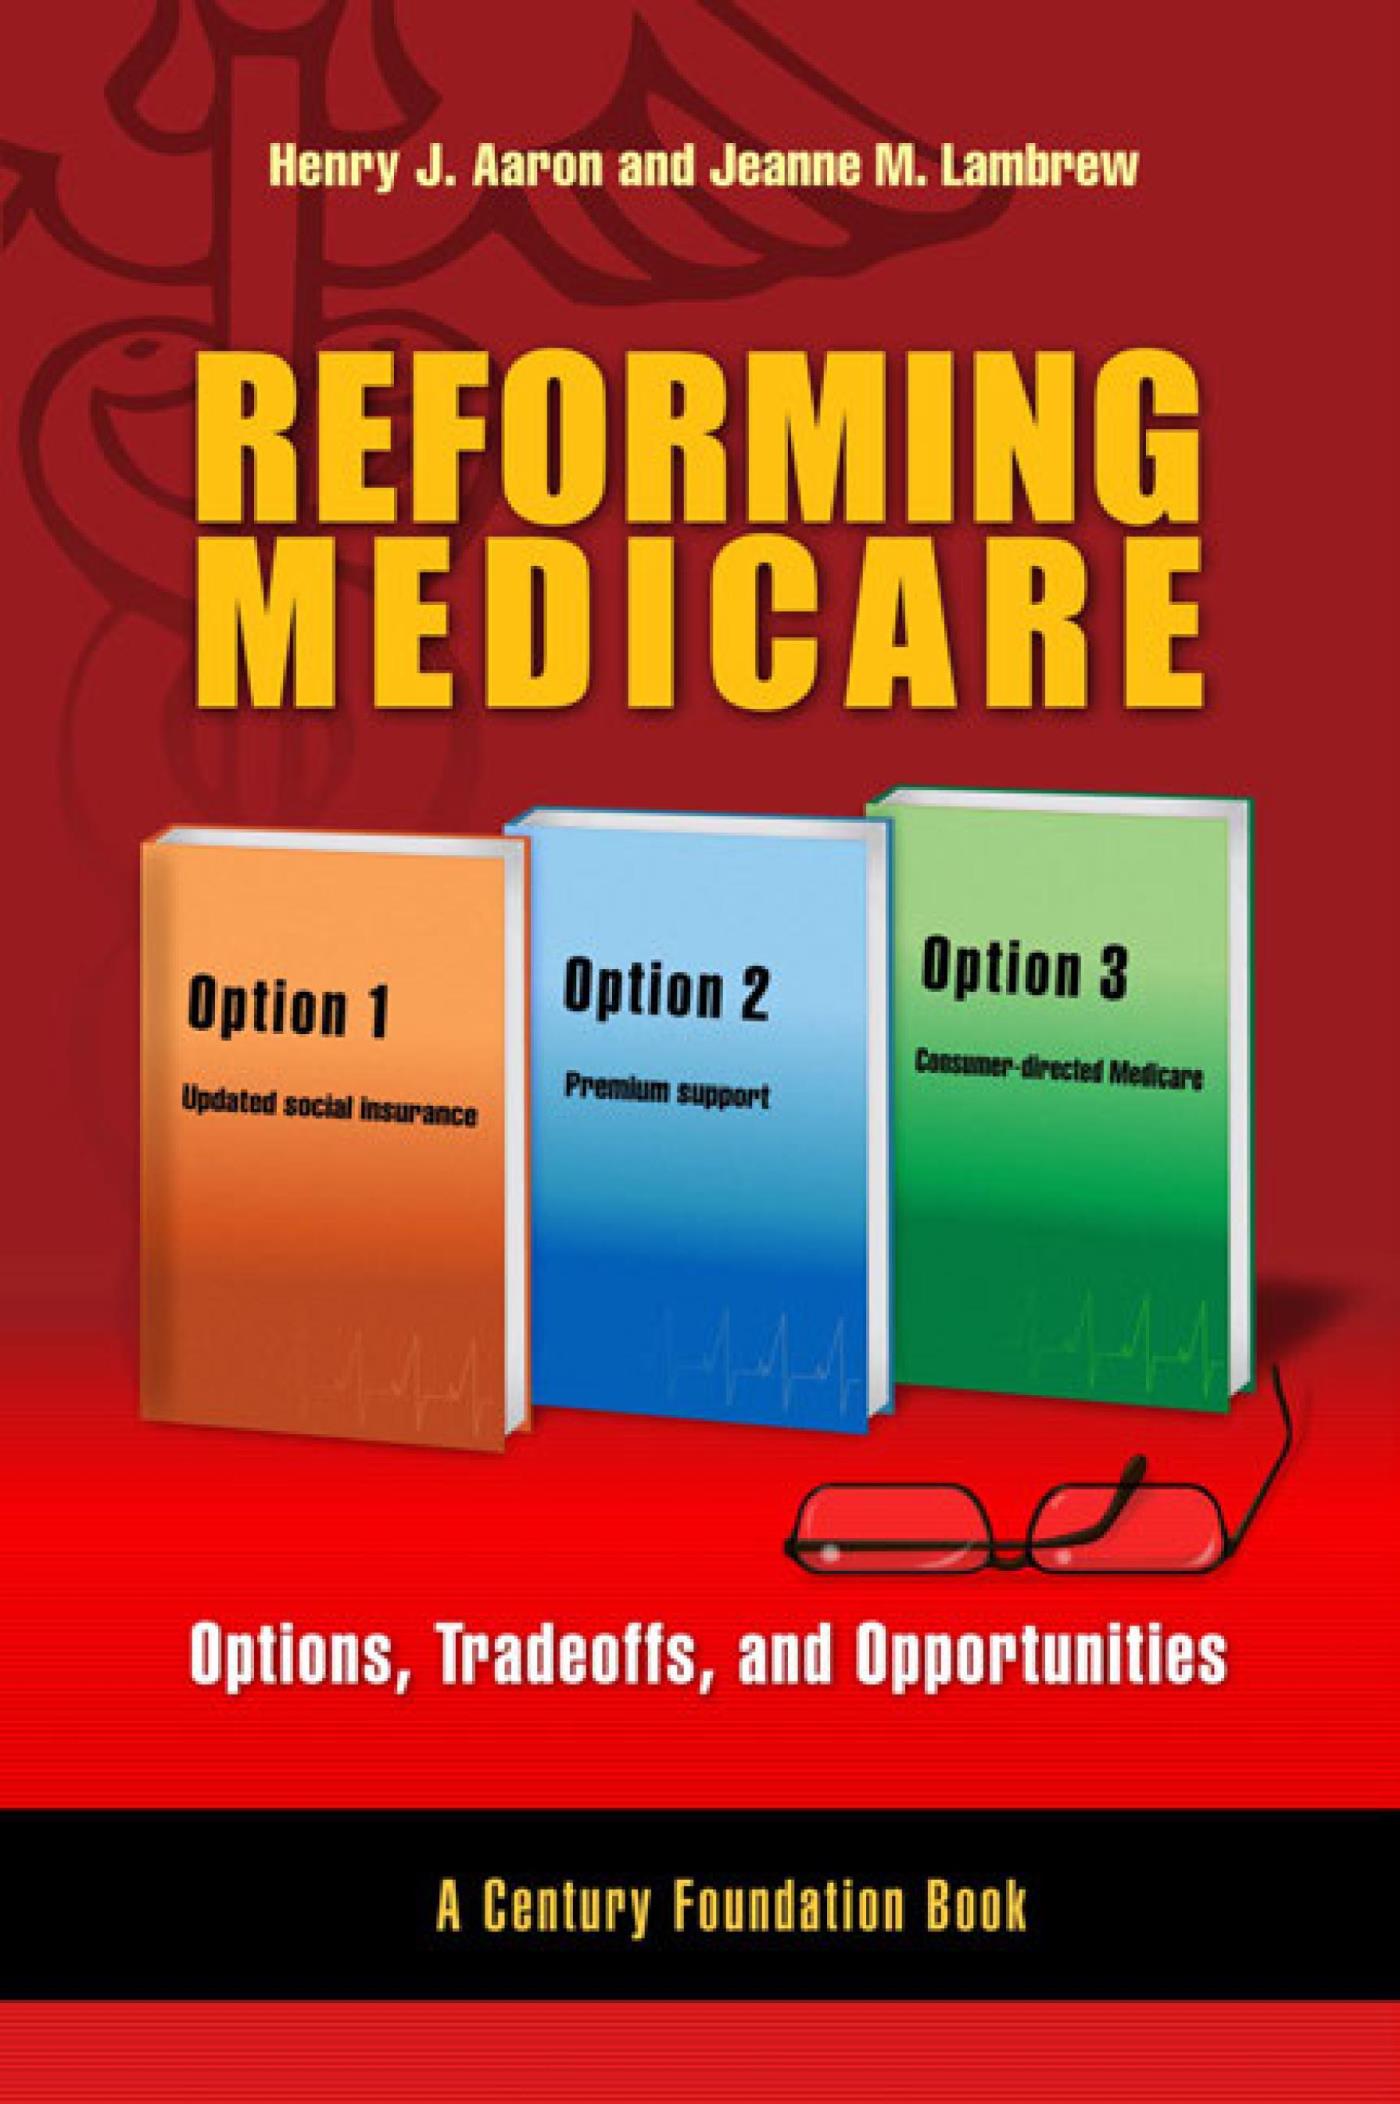 Reforming Medicare